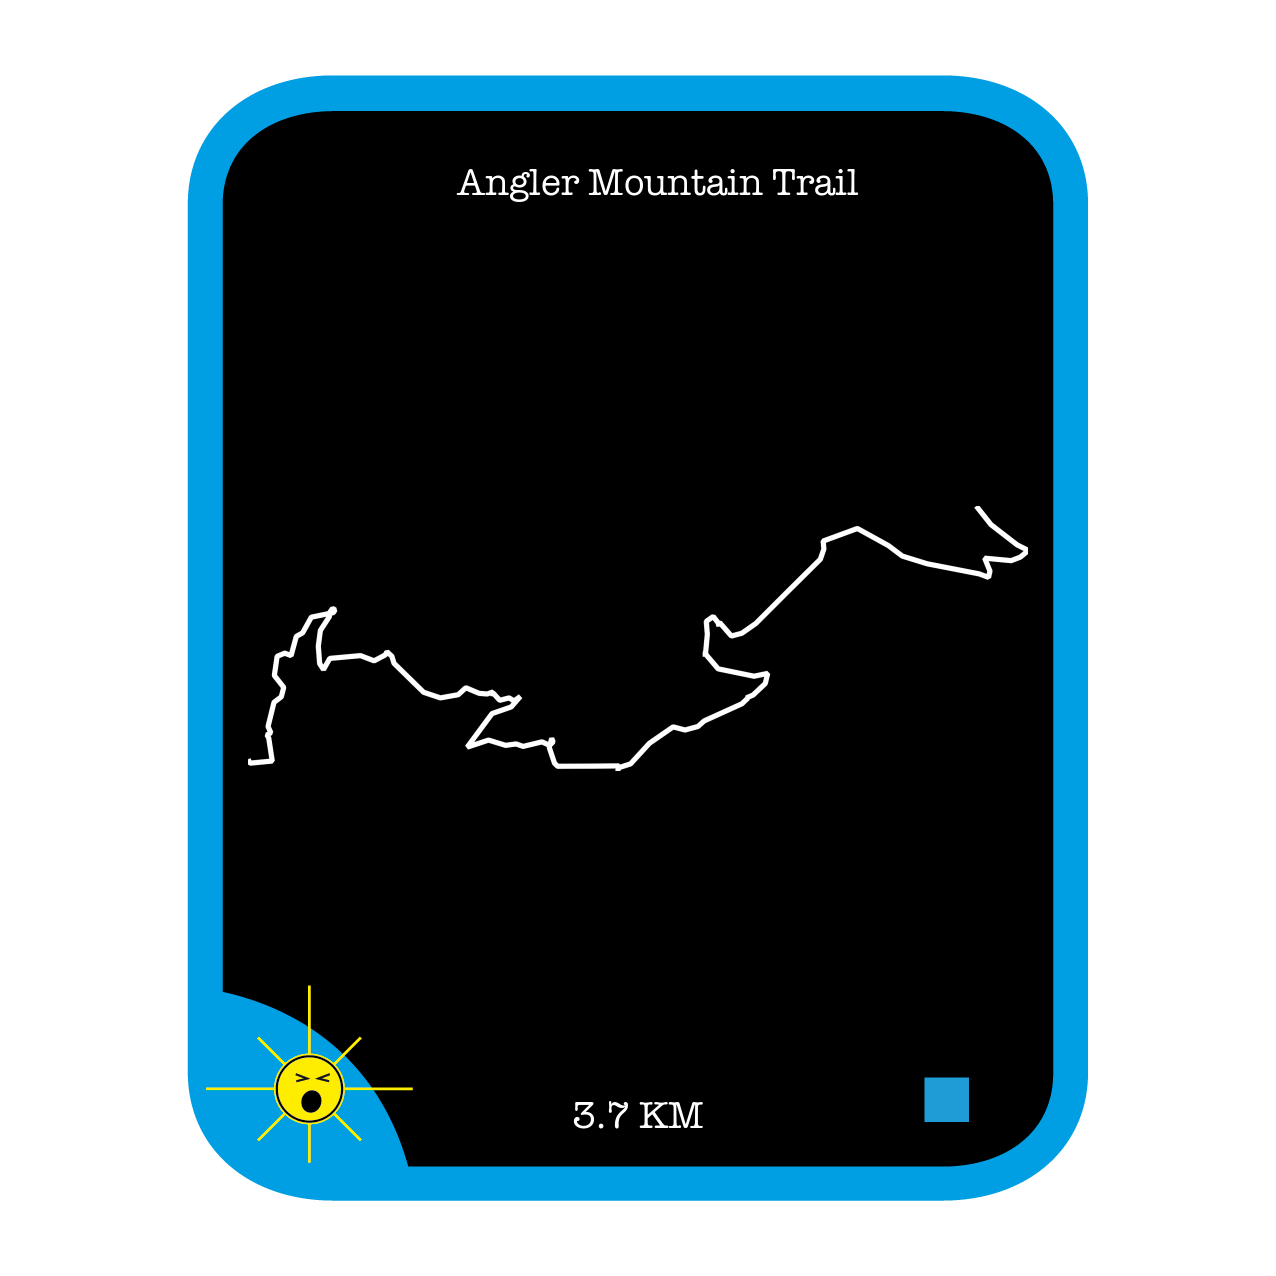 Angler Mountain Trail